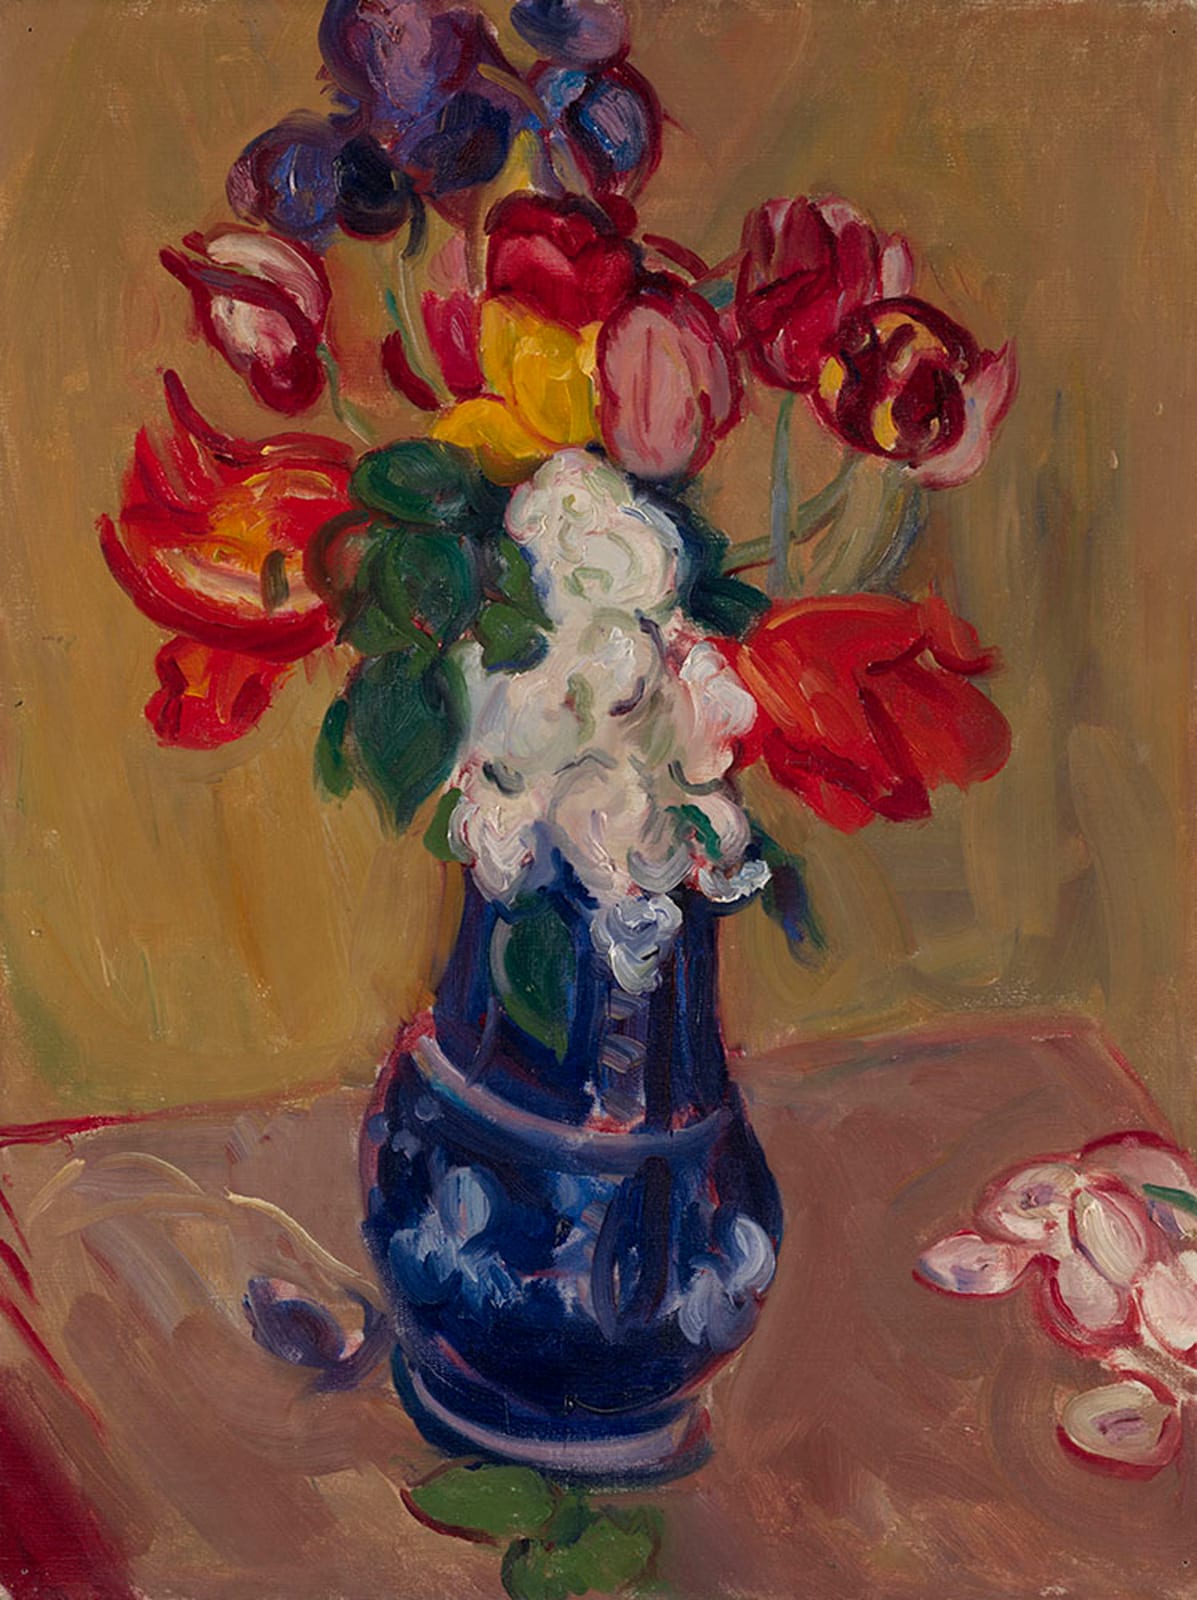 SIR MATTHEW SMITH, Tulips in a blue vase, 1926